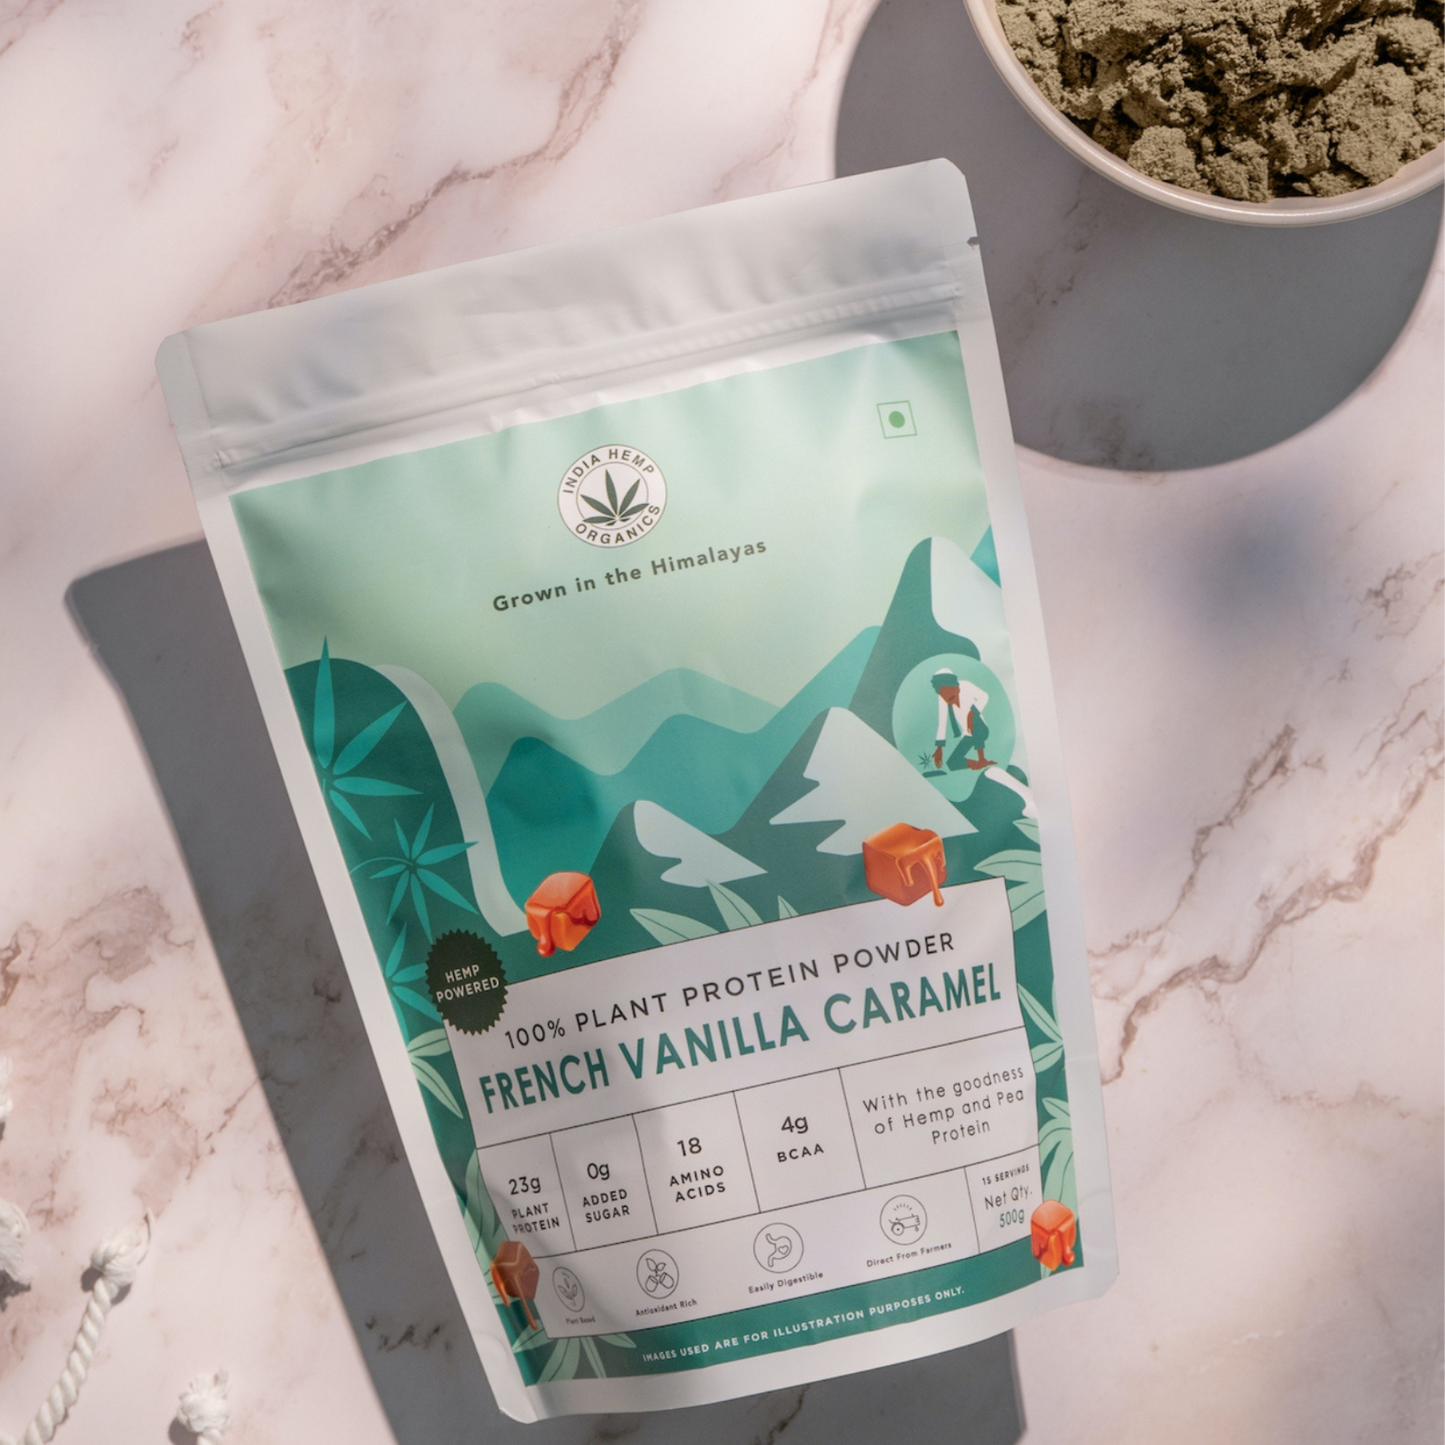 India Hemp Organics Hemp Powder - French Vanilla Caramel, 500gm